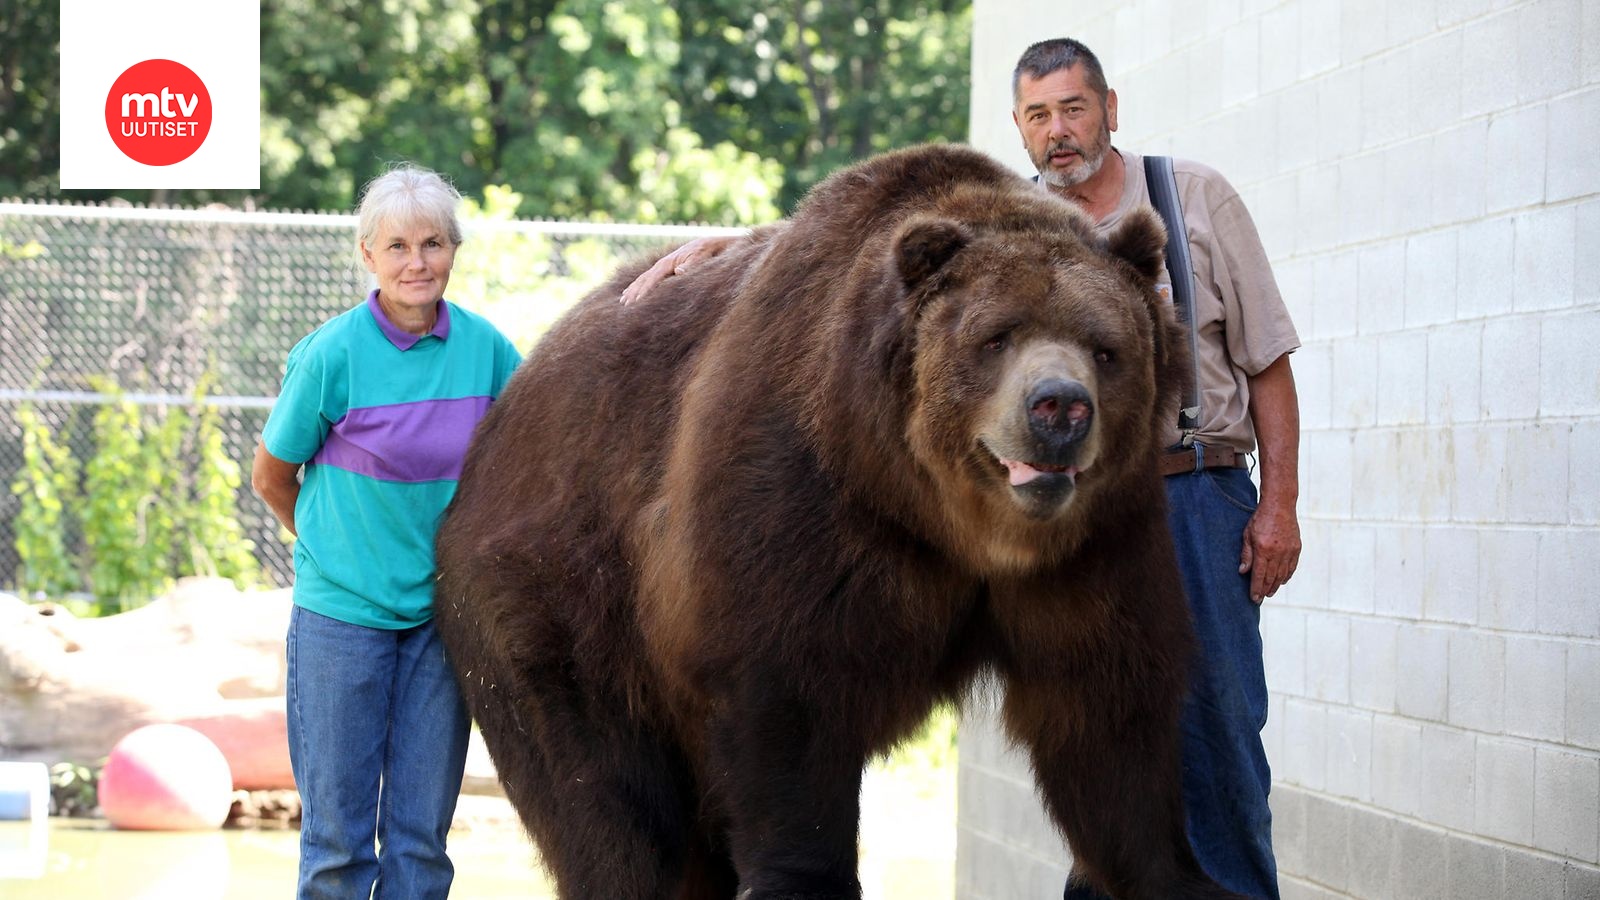 гигантские медведи фото